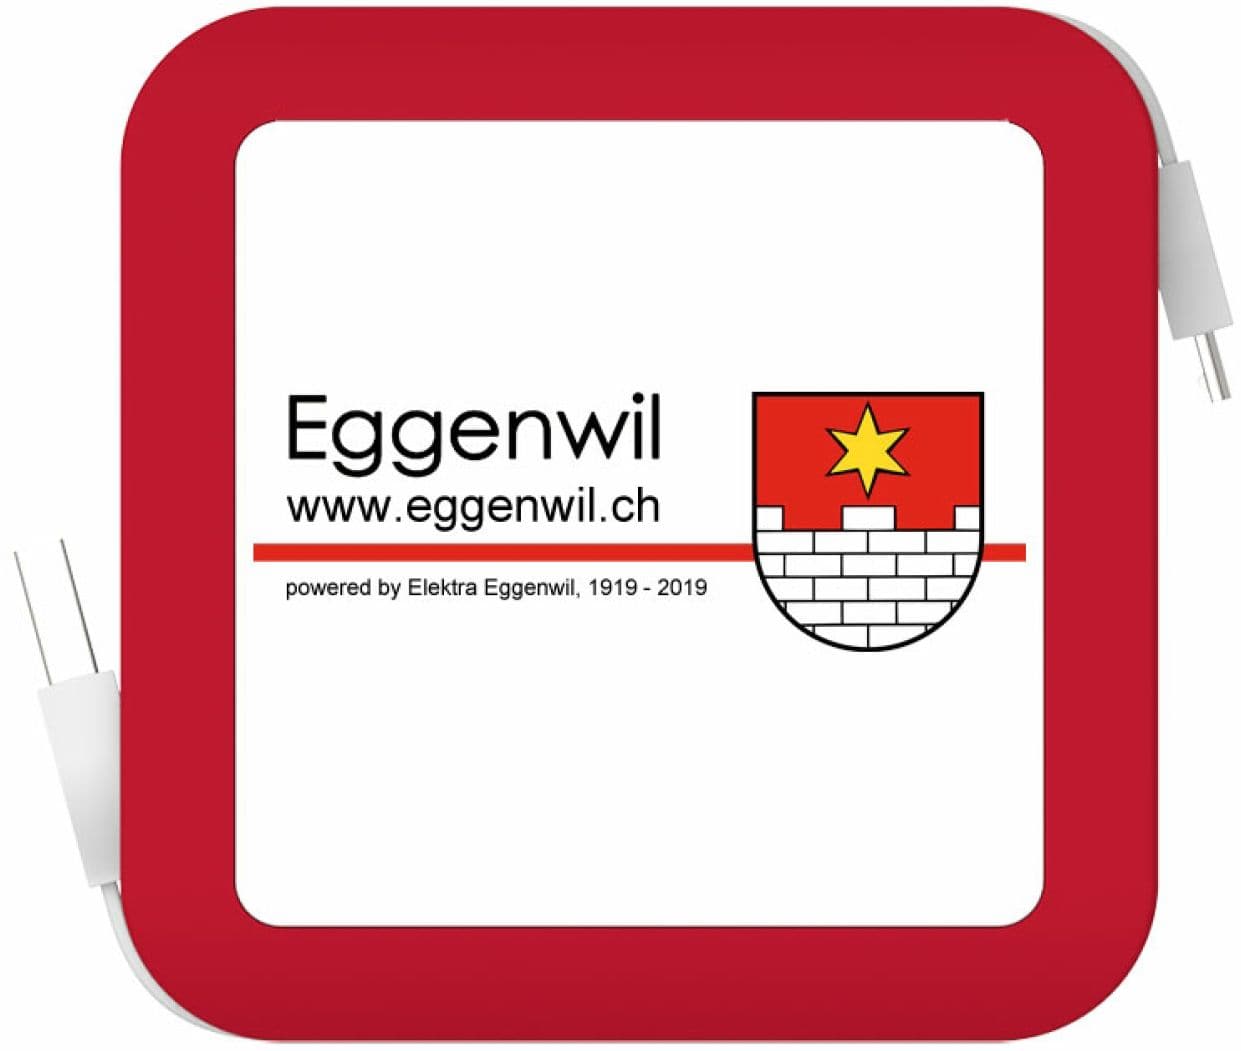 Powerbank zum 100-jährigen Jubiläum der Elektra Eggenwil 2019